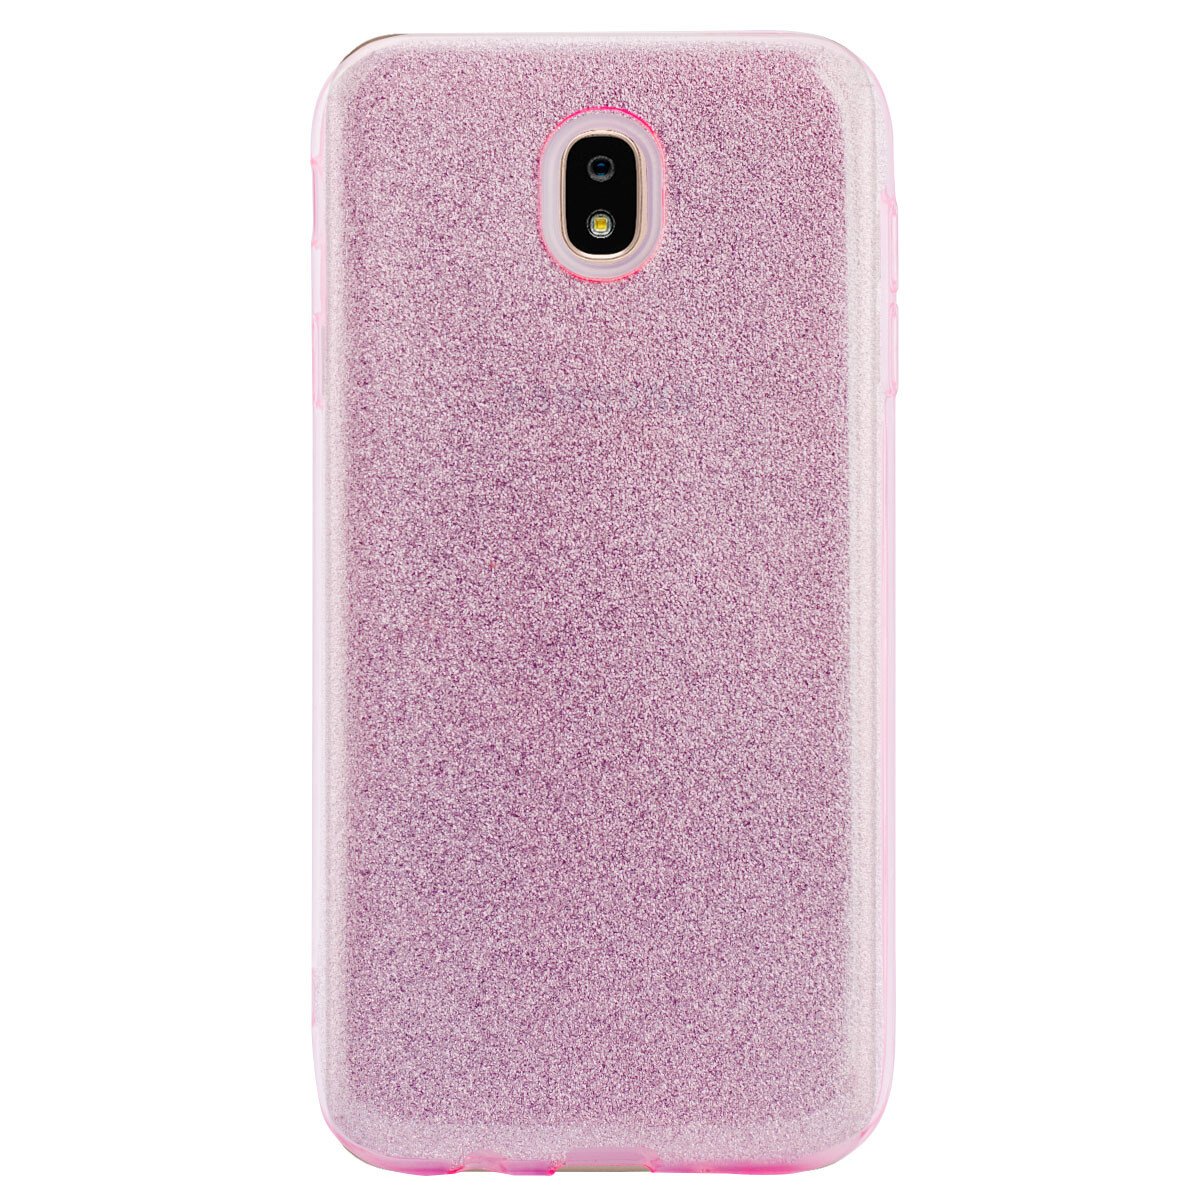 Husa silicon Samsung Galaxy J7 2017 Roz Glitter thumb